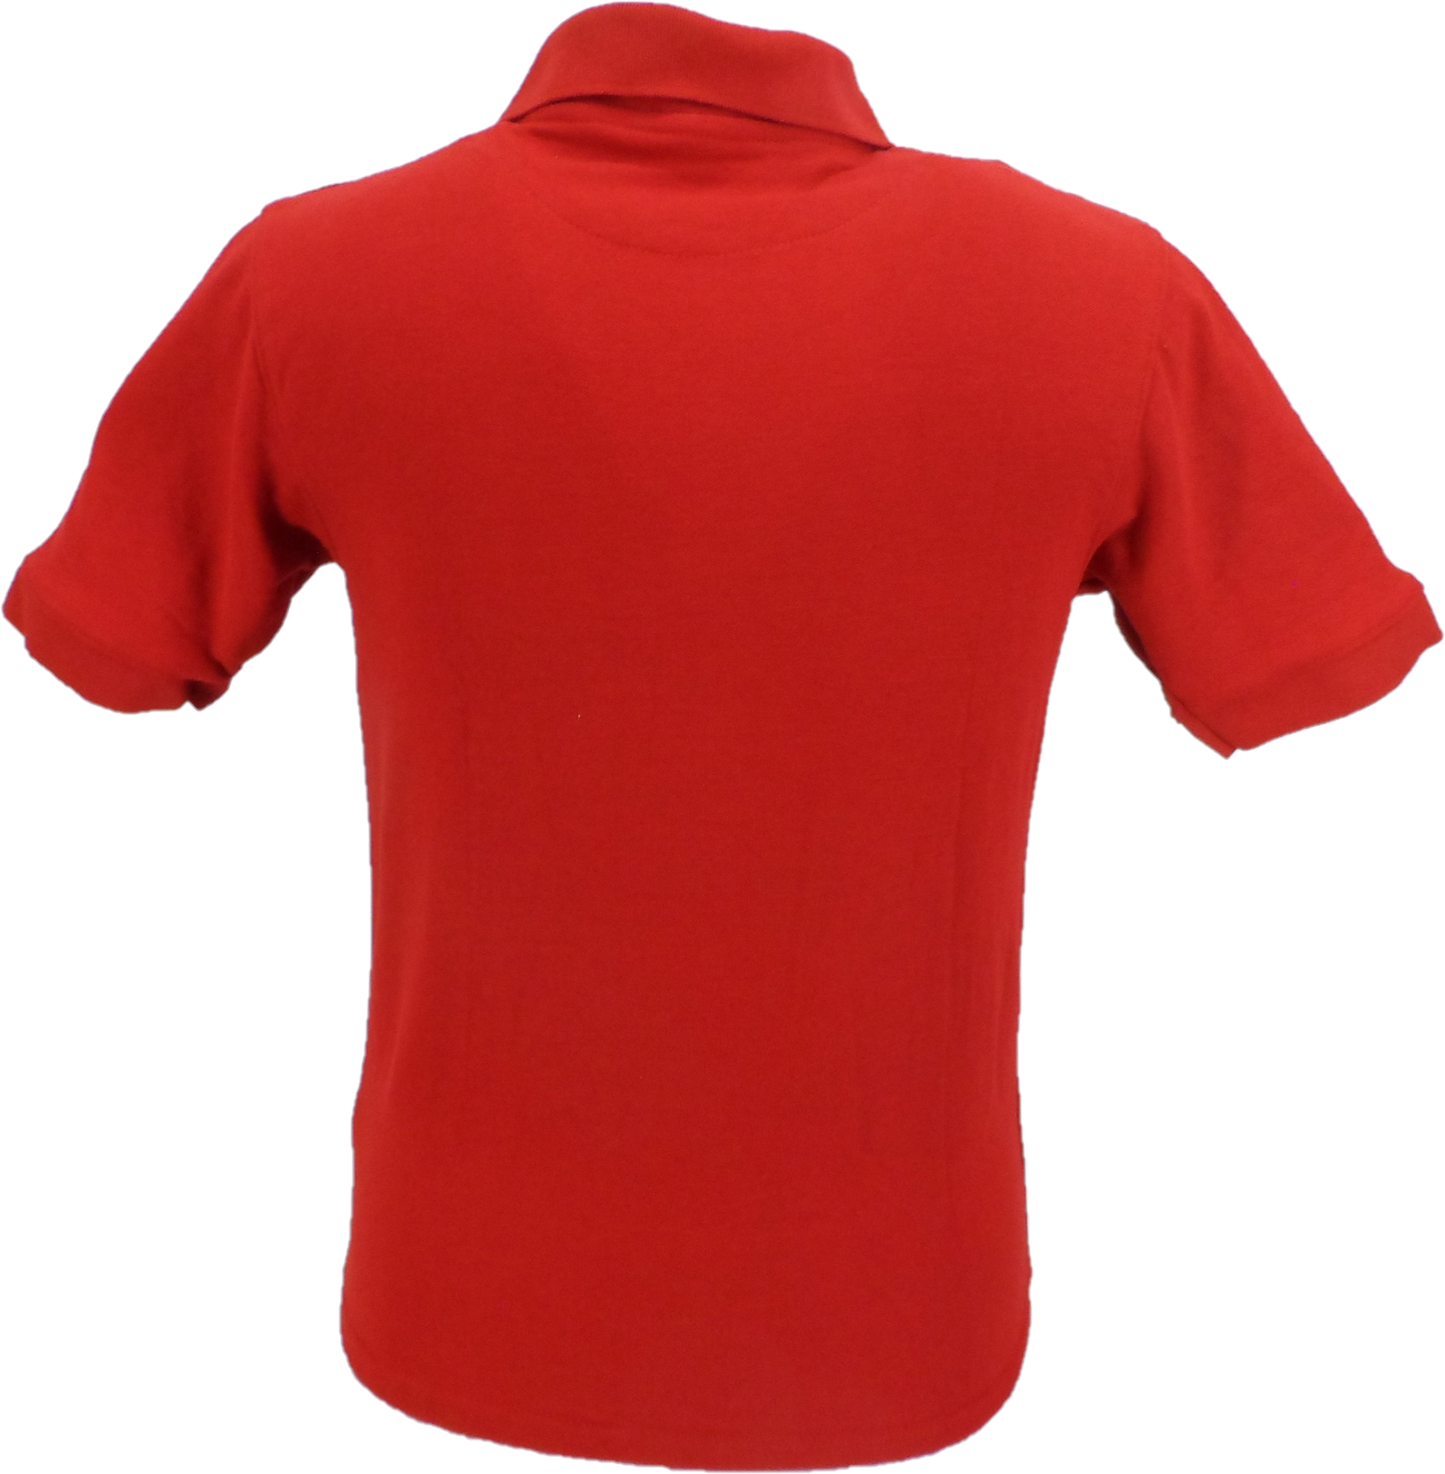 Mazeys Mens Red/Sky/White Racing Stripe Polo Shirt